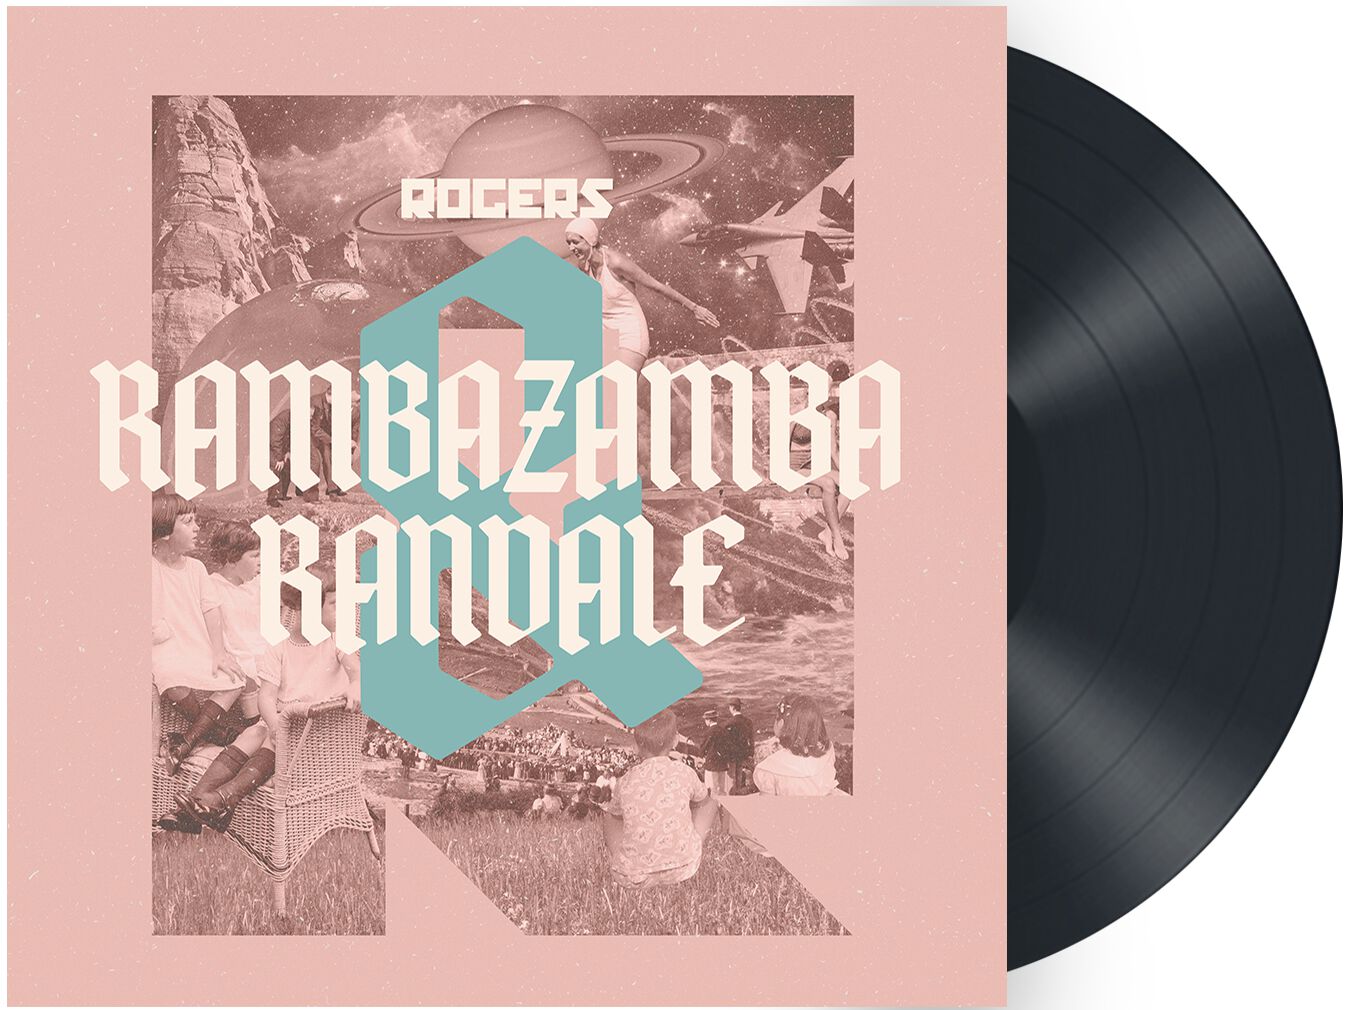 Rogers Rambazamba & Randale LP schwarz